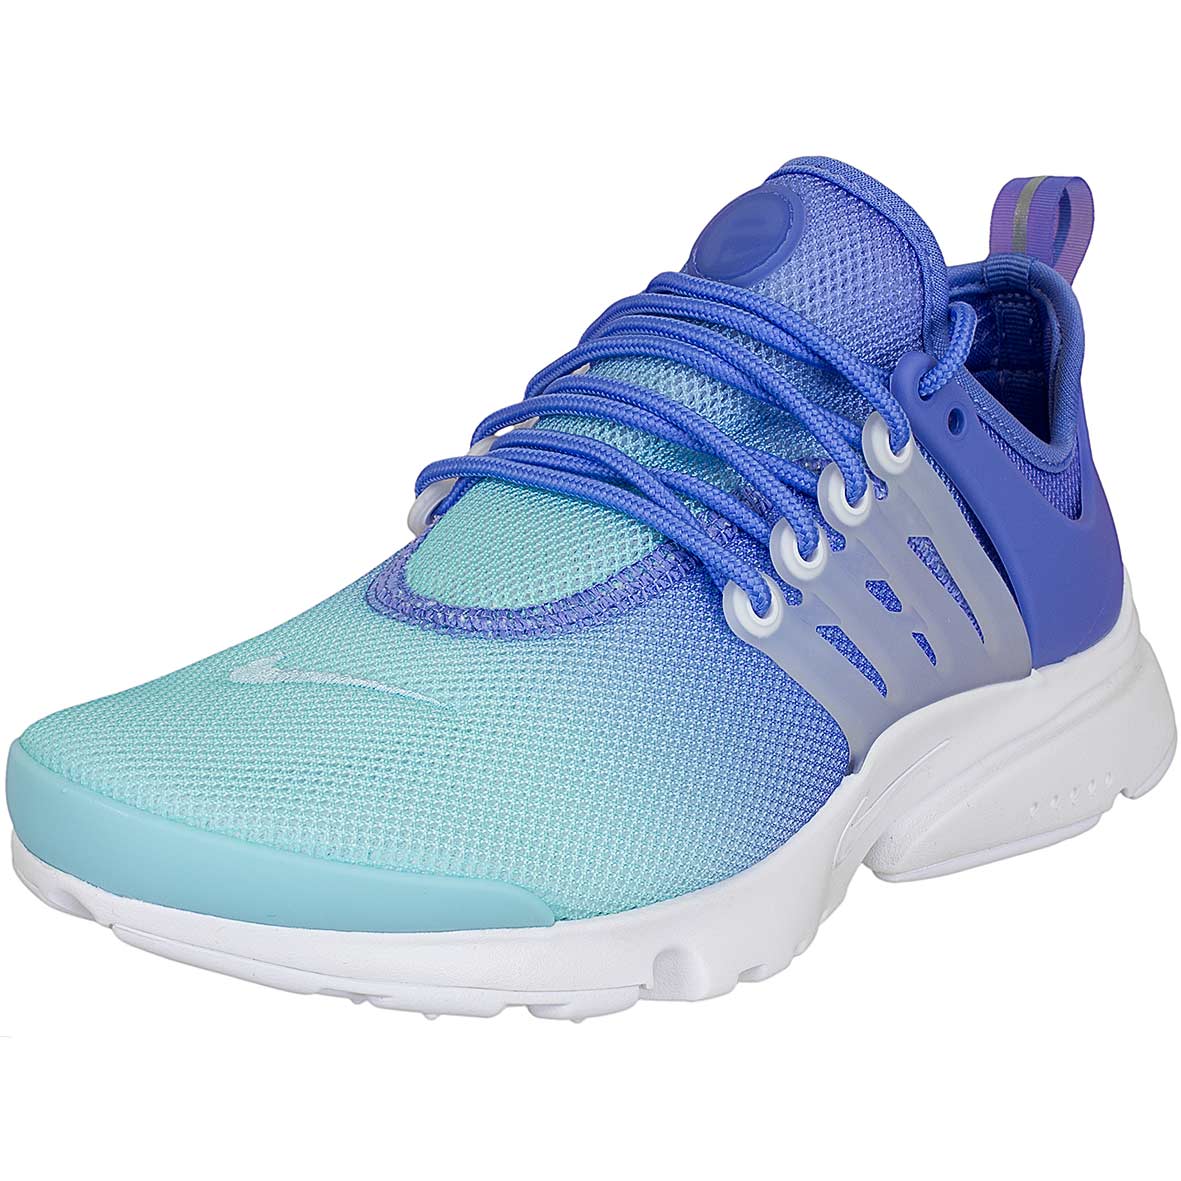 ☆ Nike Damen Sneaker Air Presto Ultra BR blau/weiß - hier bestellen!